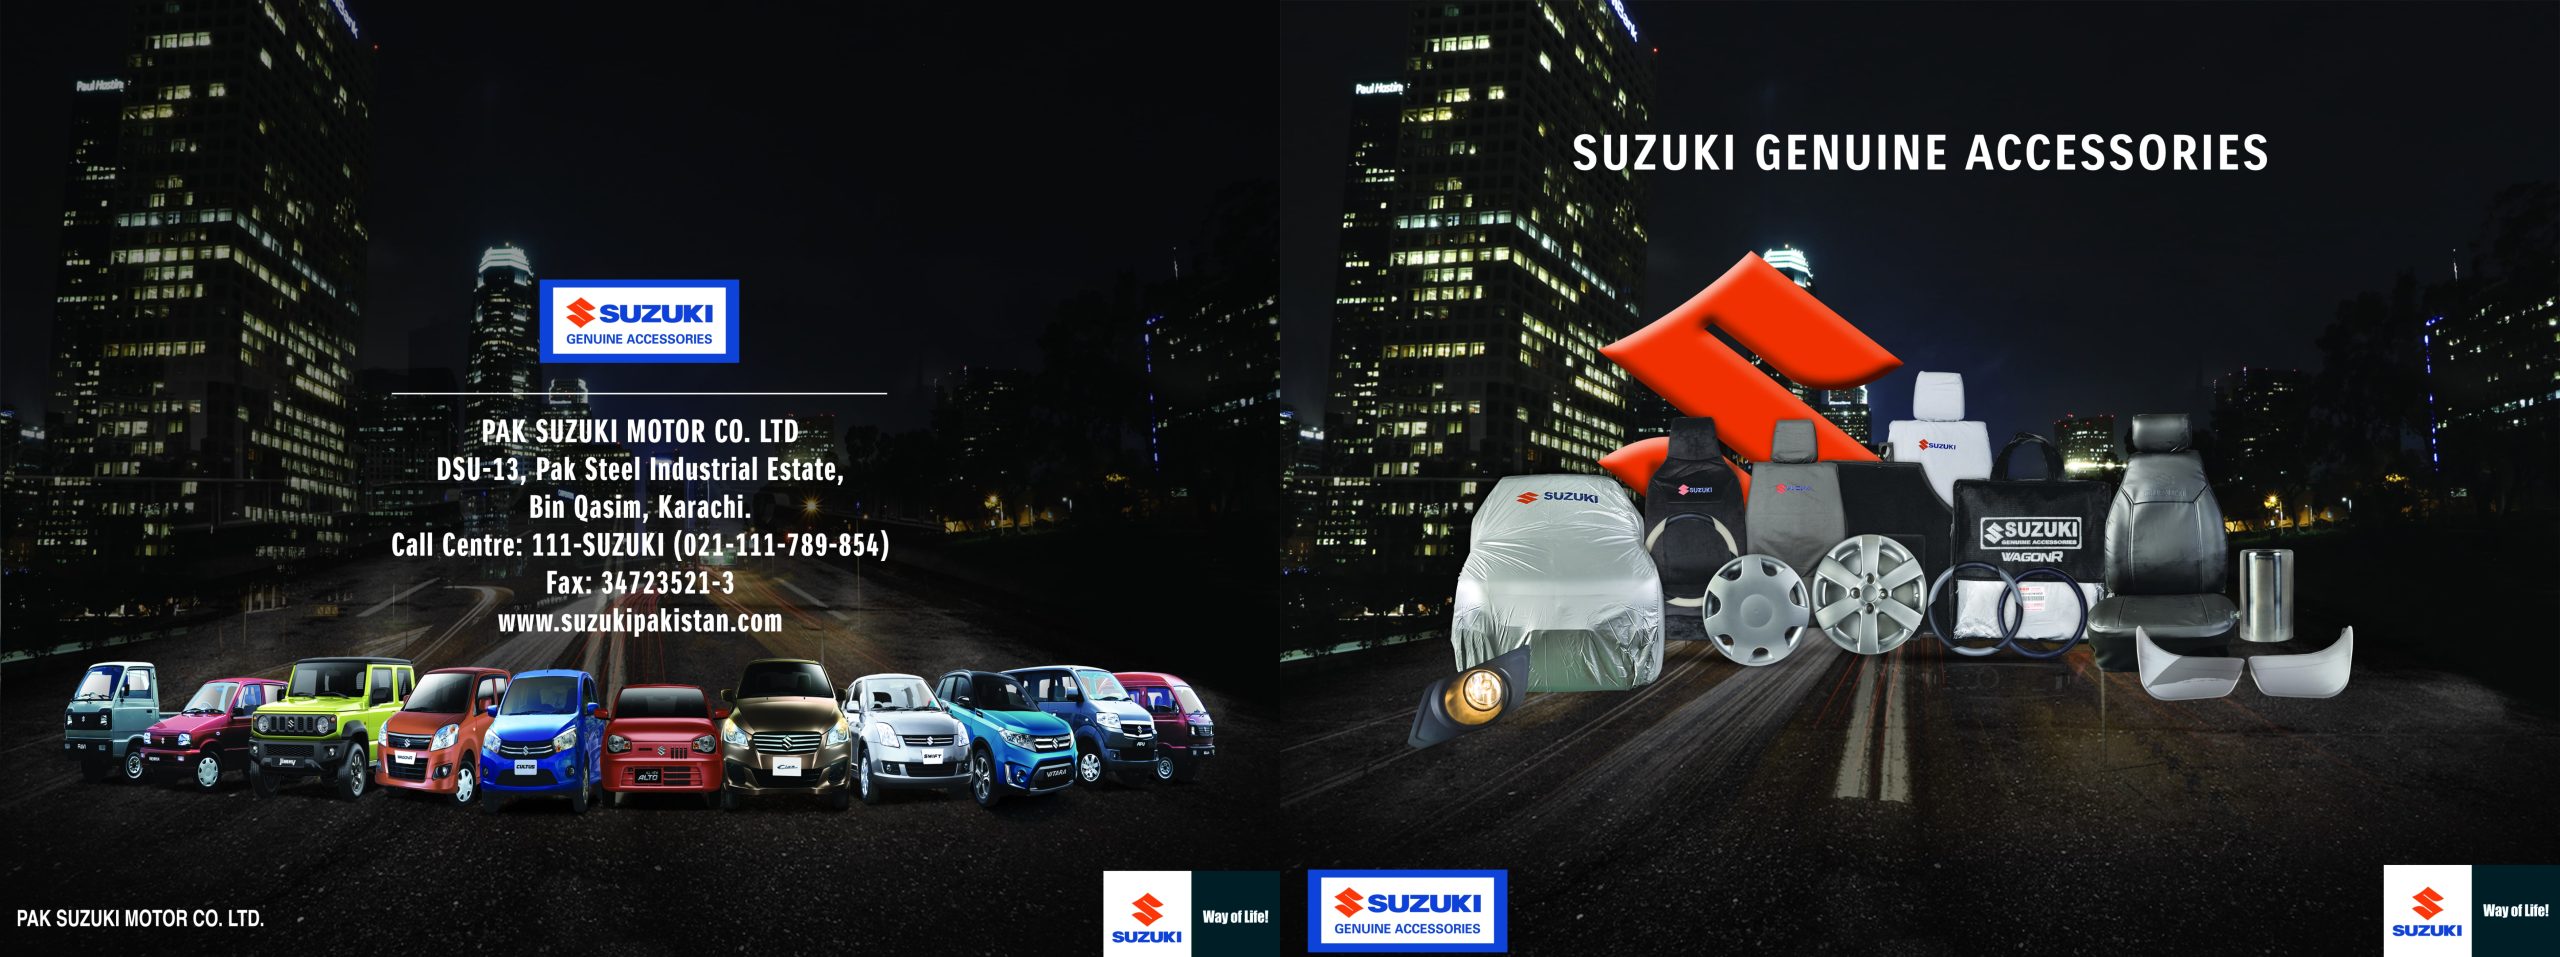 Suzuki-Gujranwala-Motors-Suzuki-Genuine-Accessories-scaled